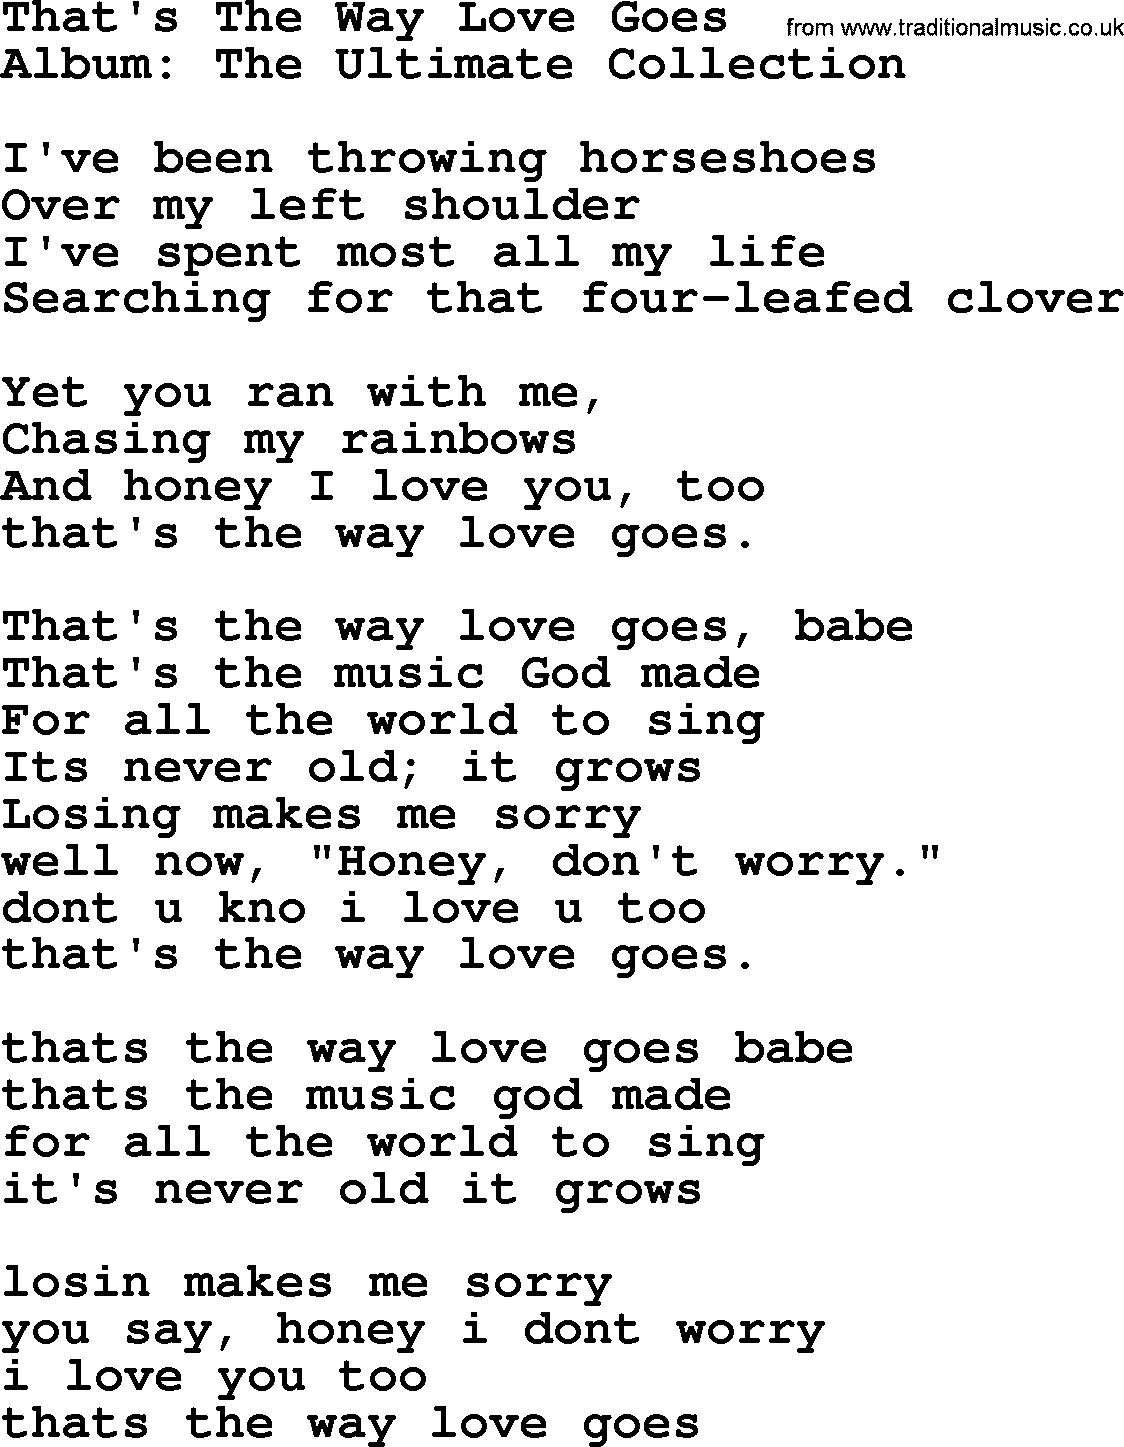 Merle Haggard song: That's The Way Love Goes, lyrics.